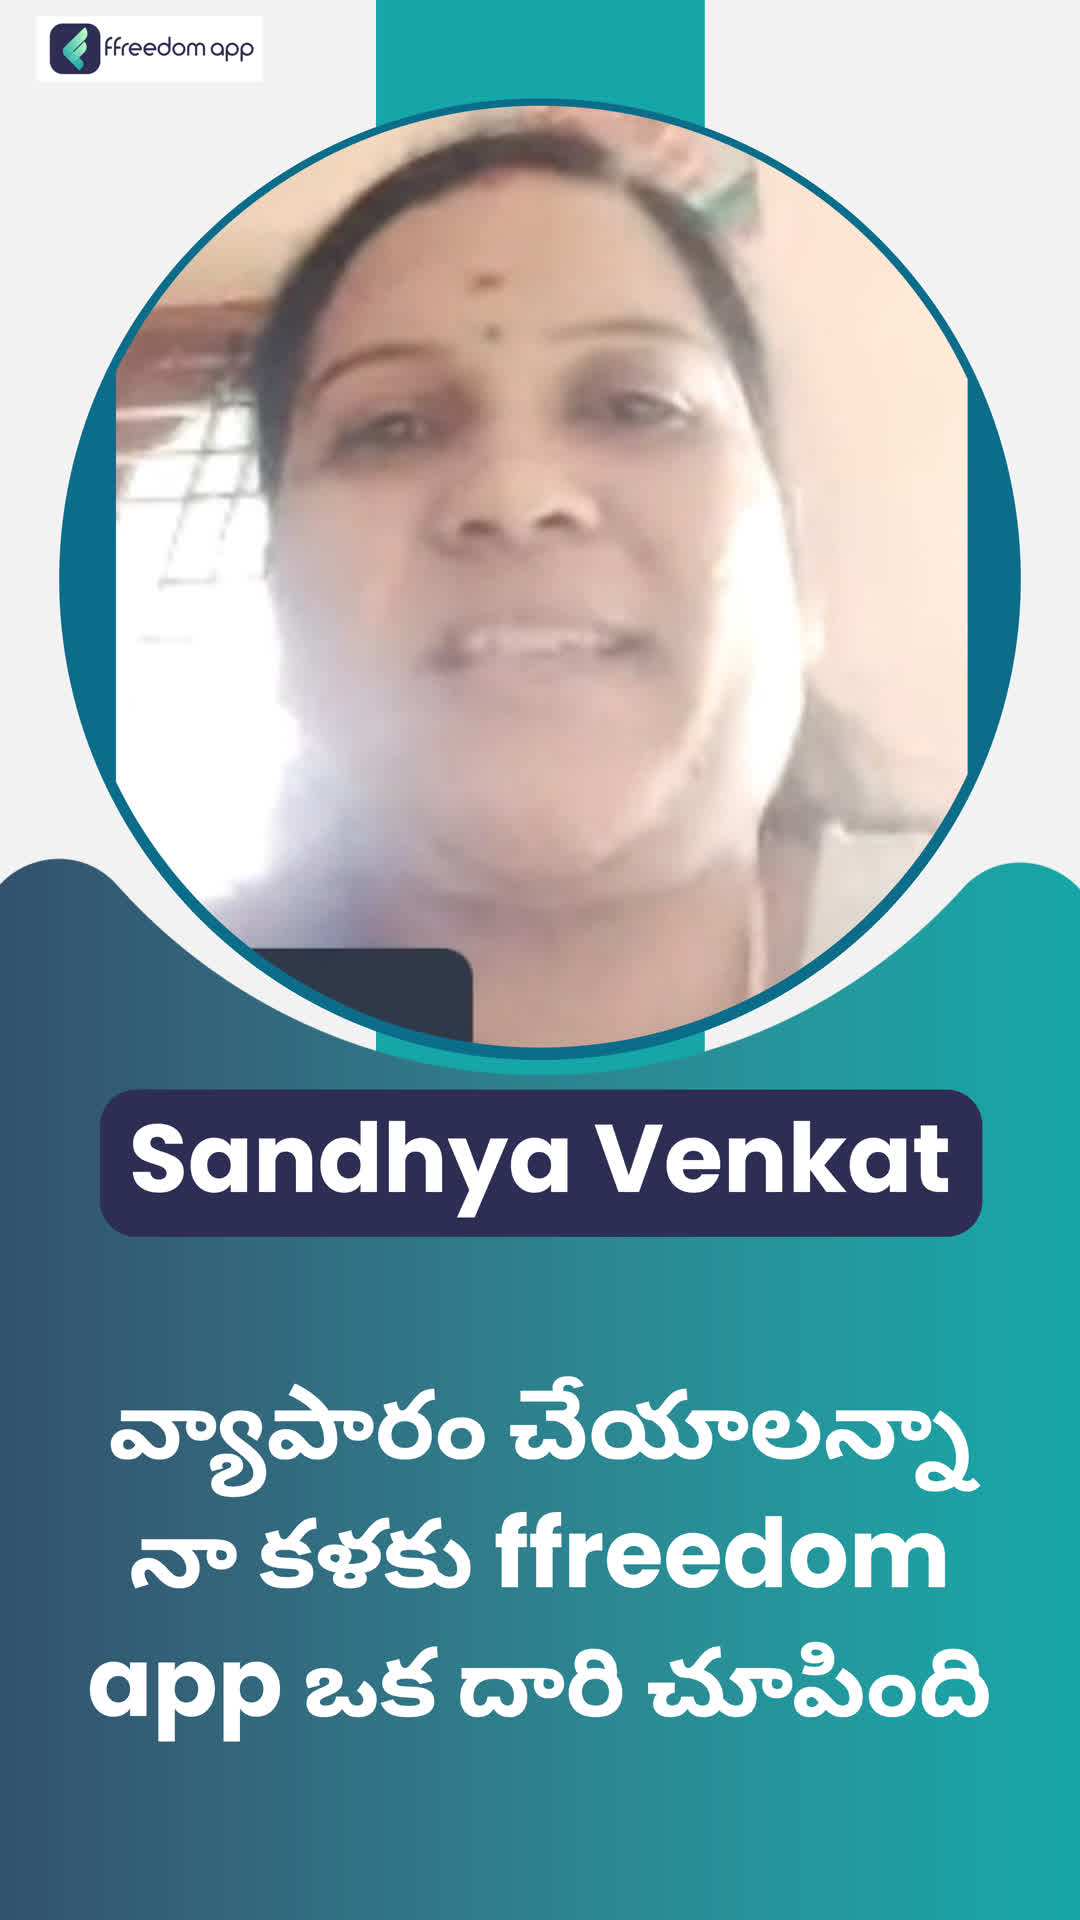 sandhya venkat's Honest Review of ffreedom app - Krishnagiri ,Tamil Nadu